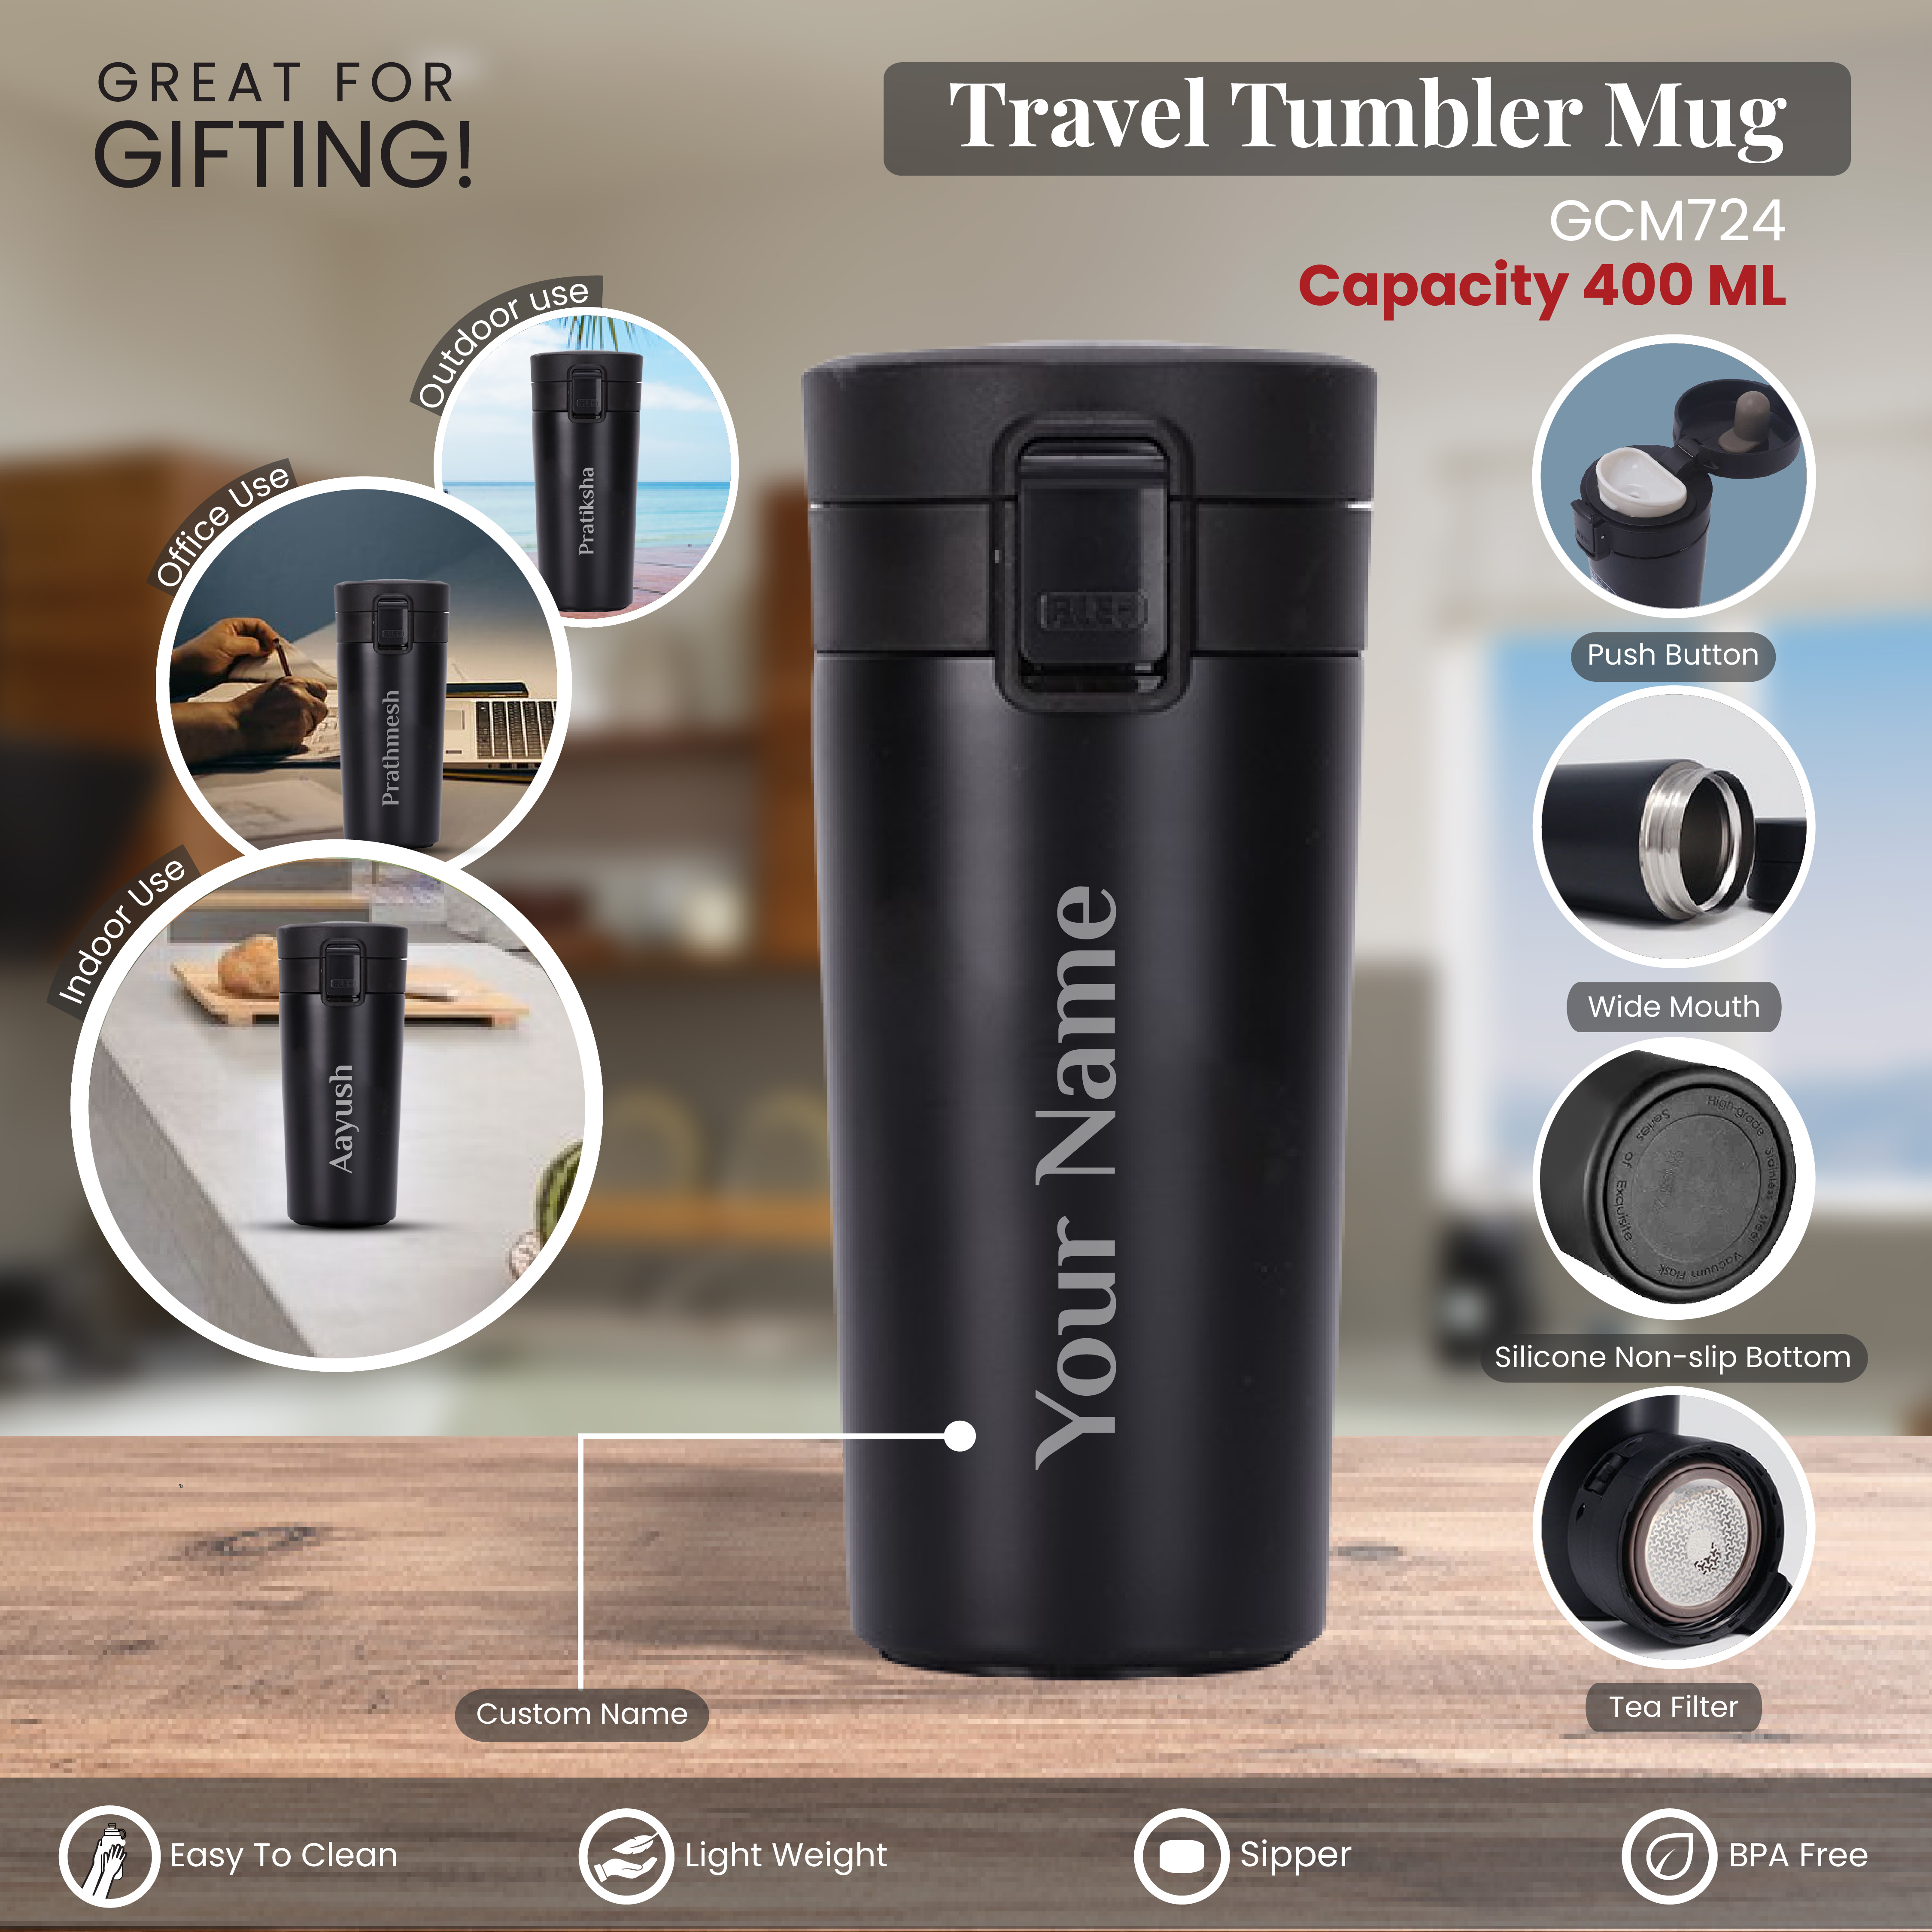 1683723445_Travel Tumbler Mug 724-01